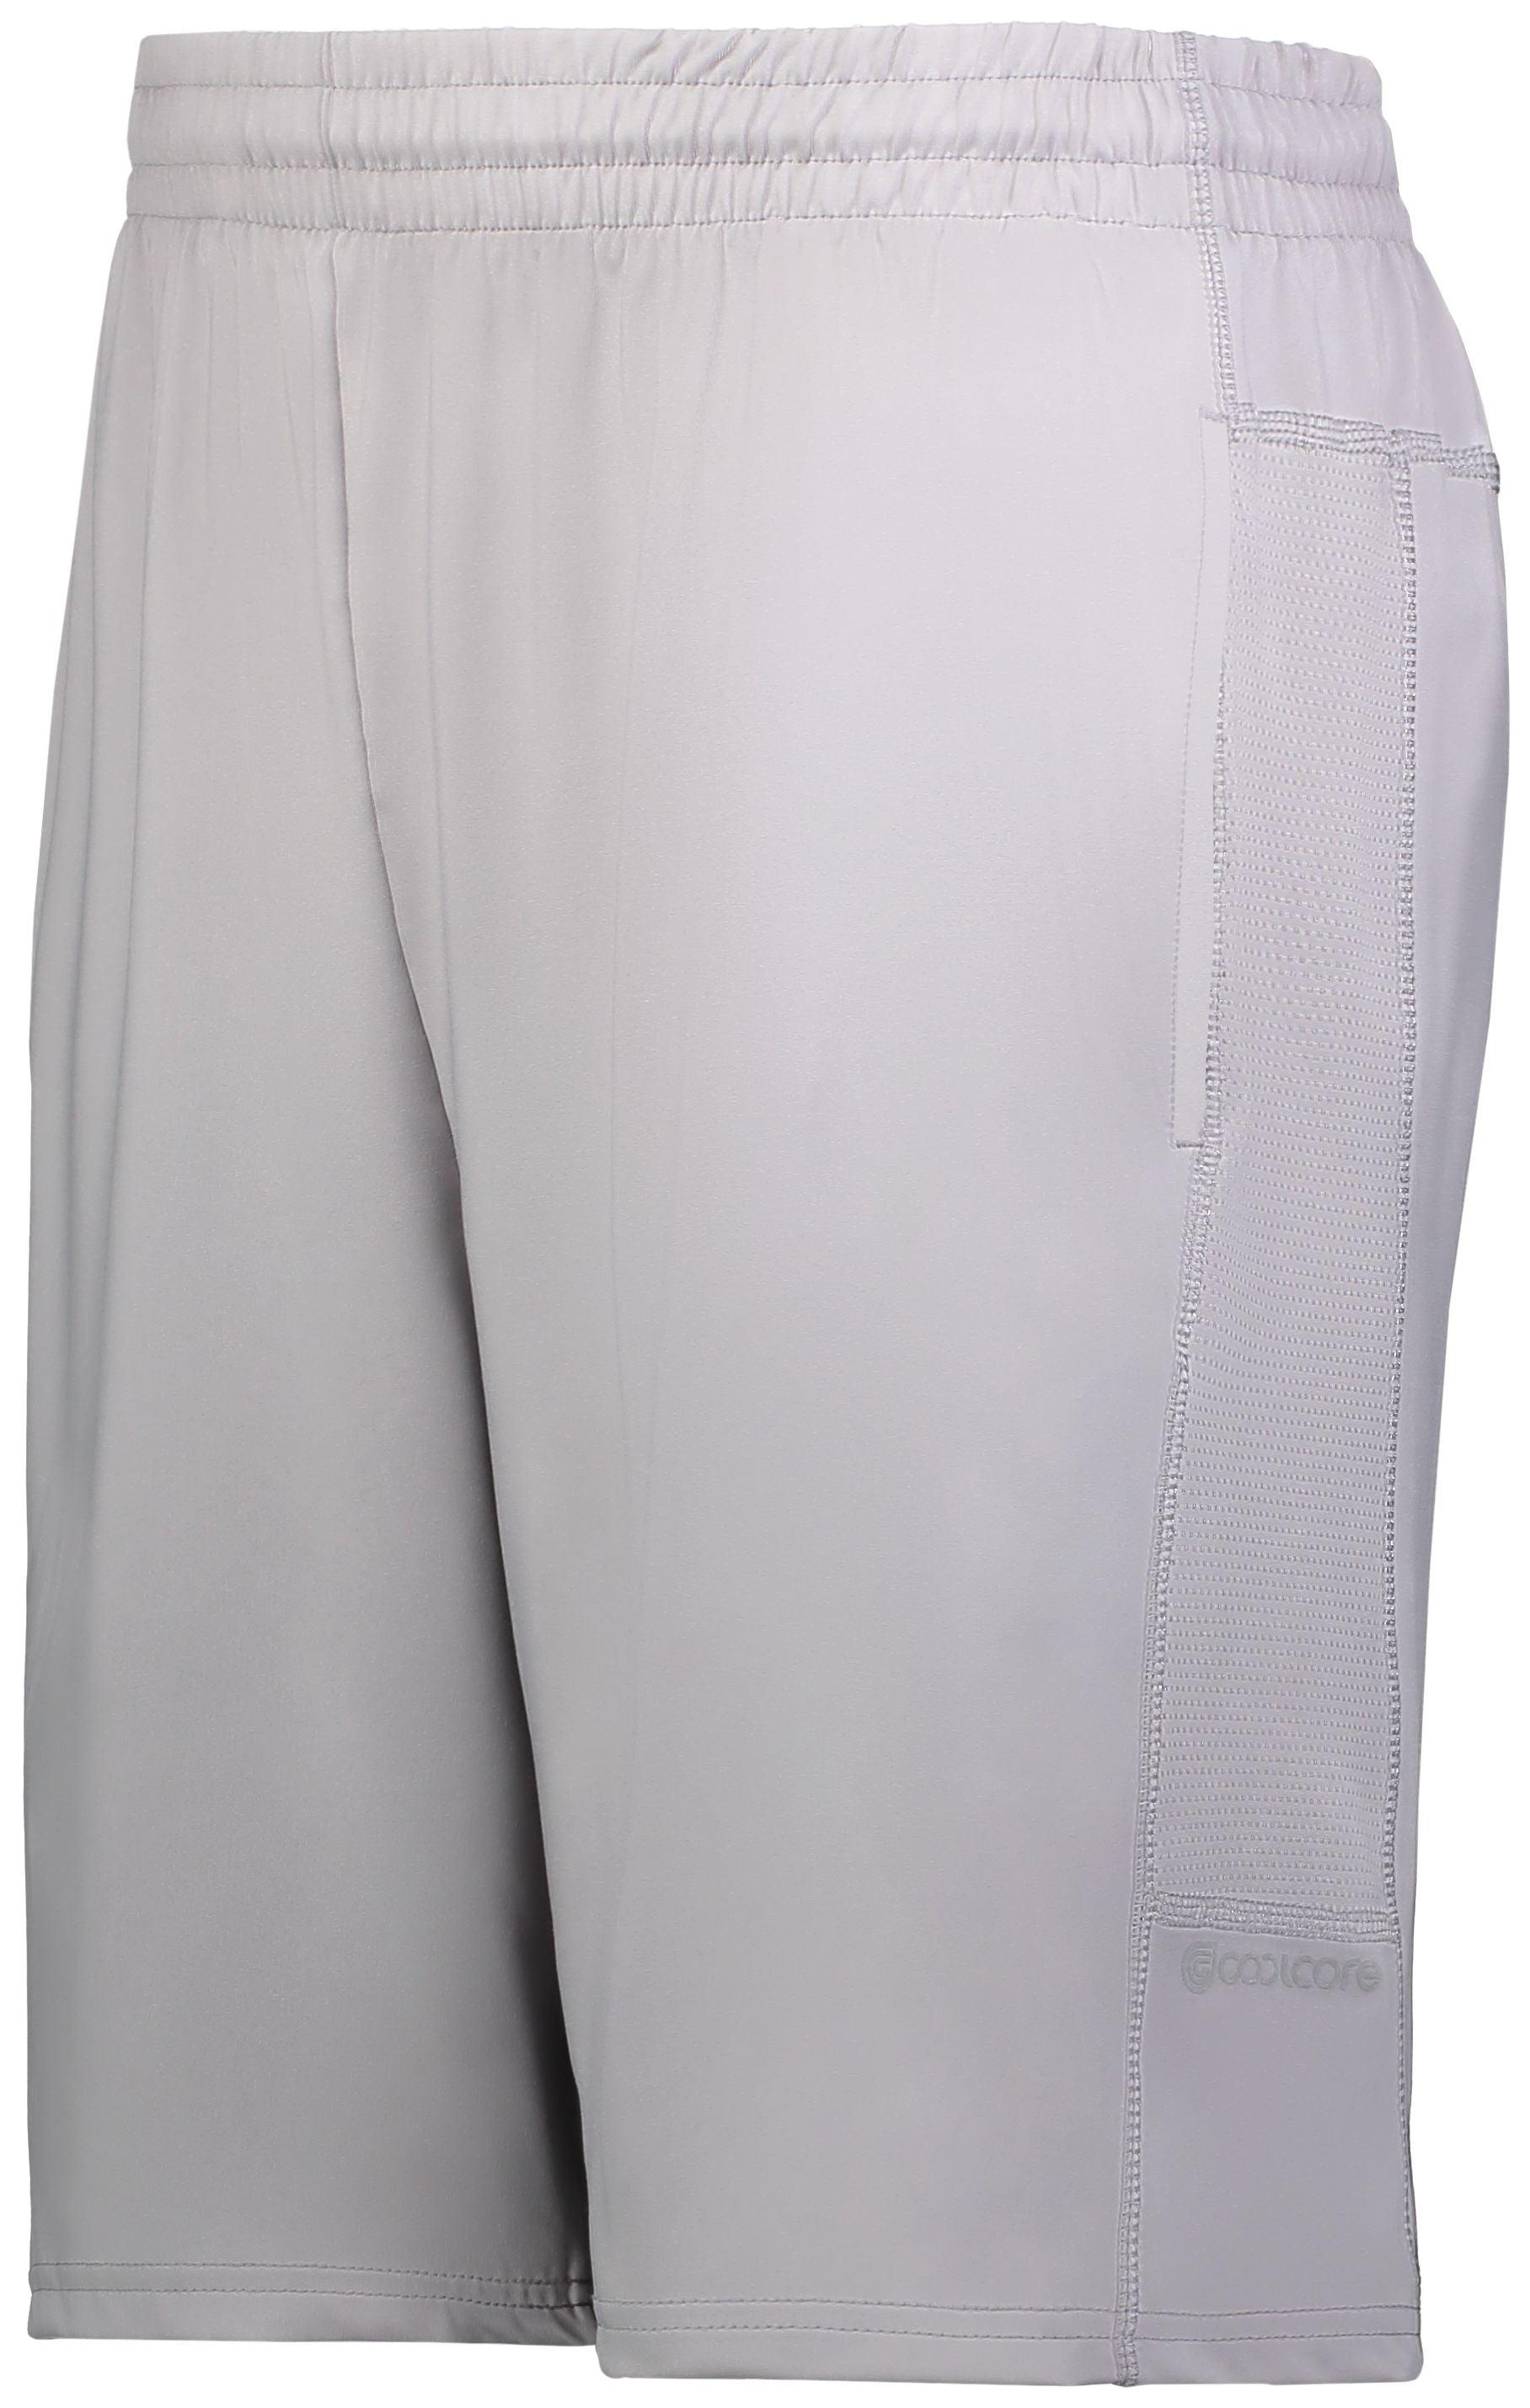 Coolcore® Shorts - Dresses Max